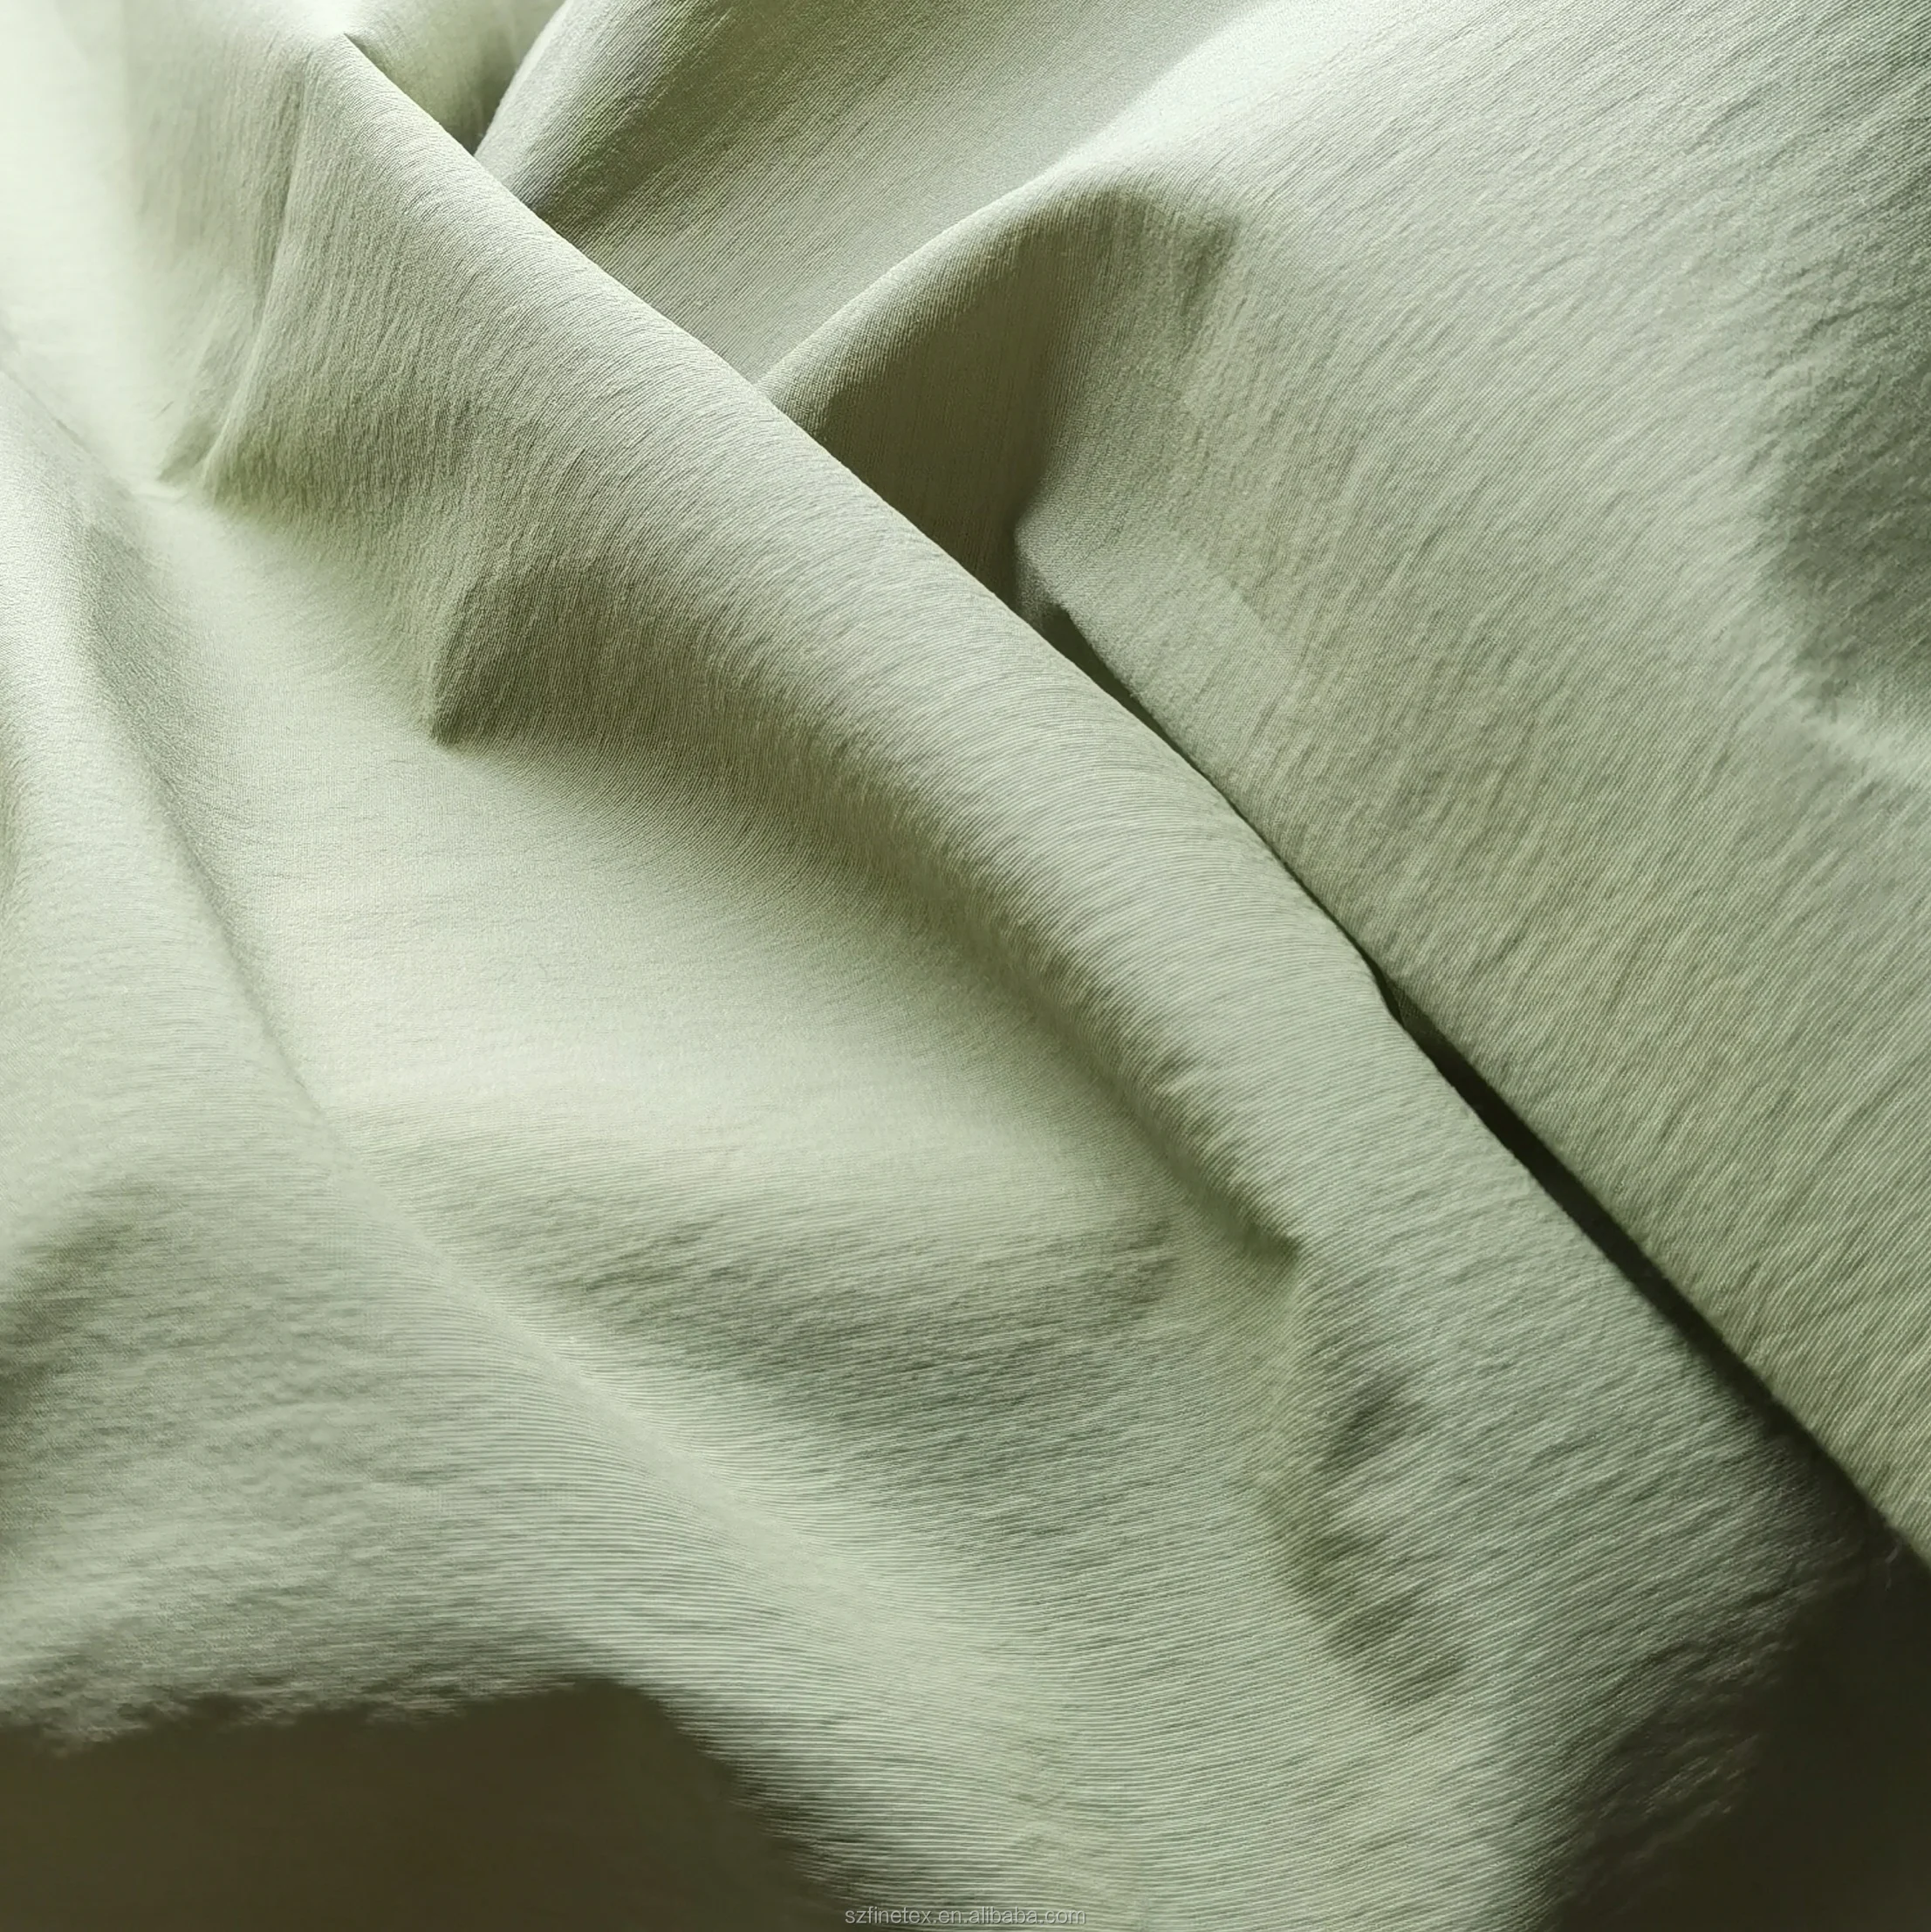 
high quality nylon cotton blend ultralight 56gsm microfiber 20D*80S+20D ottaman crepe 52%polyamide 48%cotton garment fabric 